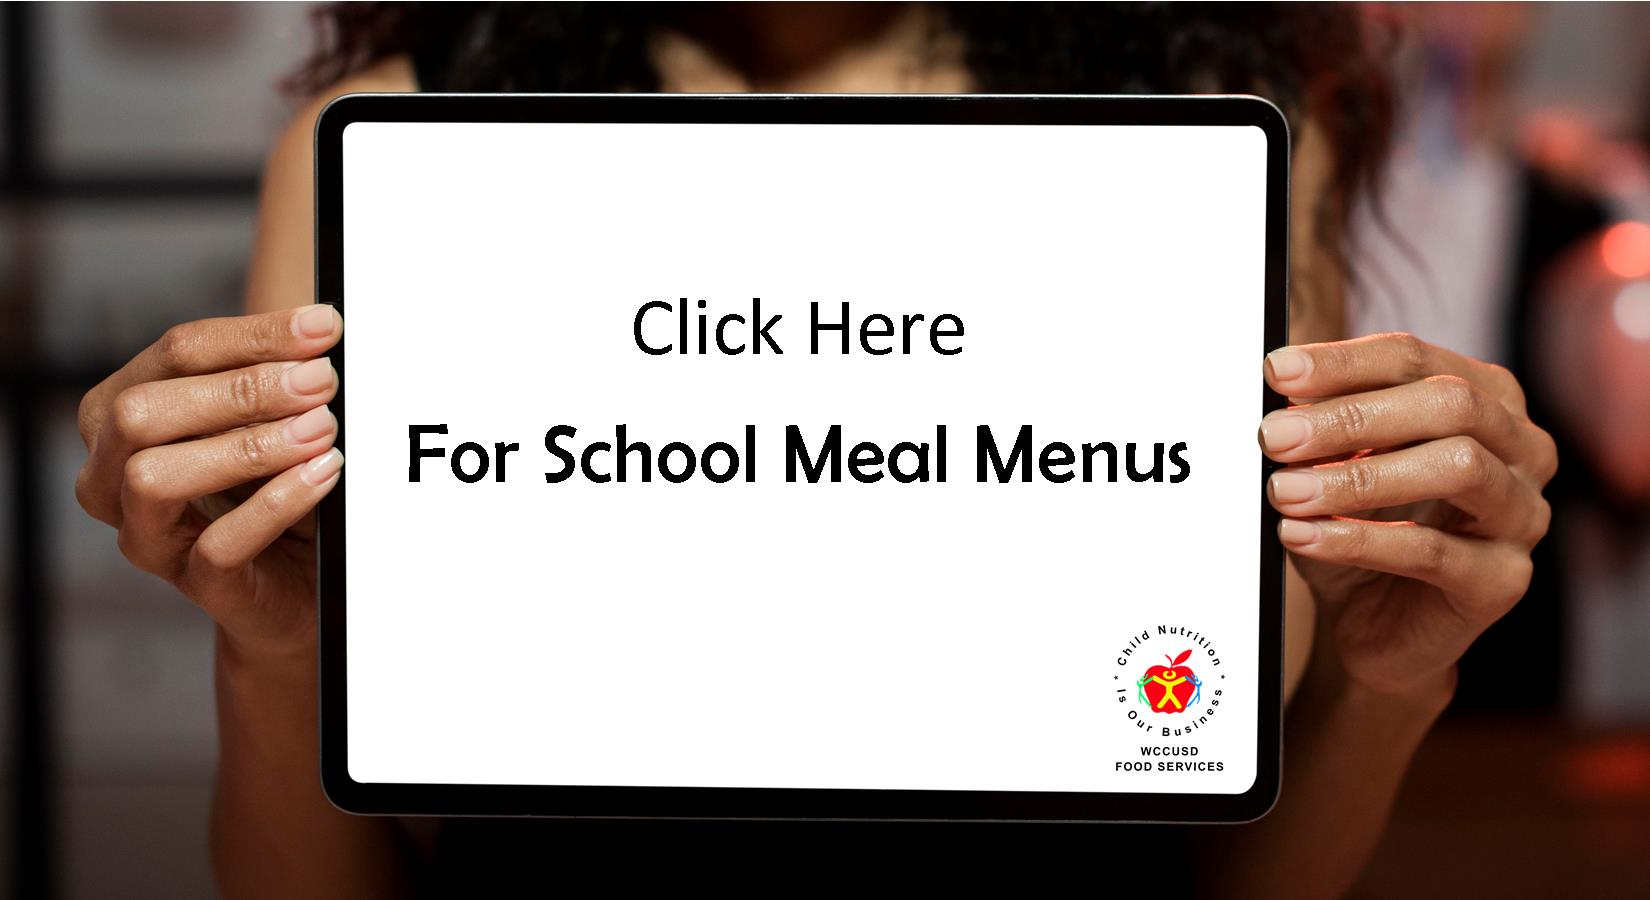 1MenuButtons/L/Events/School Mean menu buttons.jpg